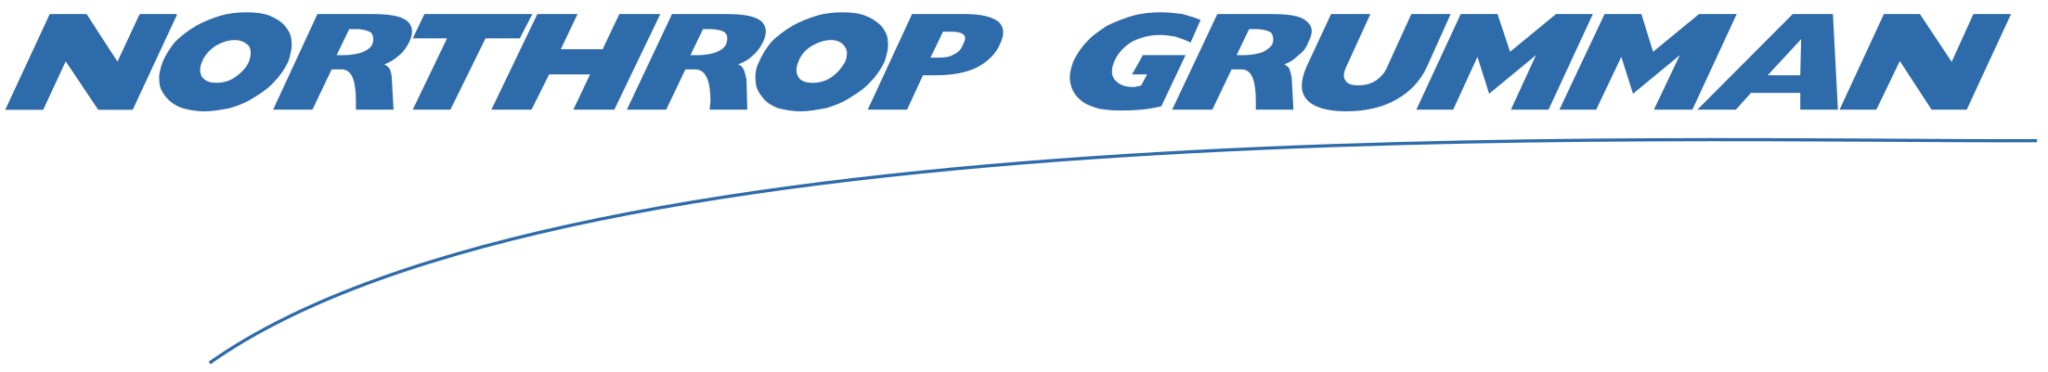 Northrop Grumman 1 Logo Png Transparent Aero Club Of Southern California